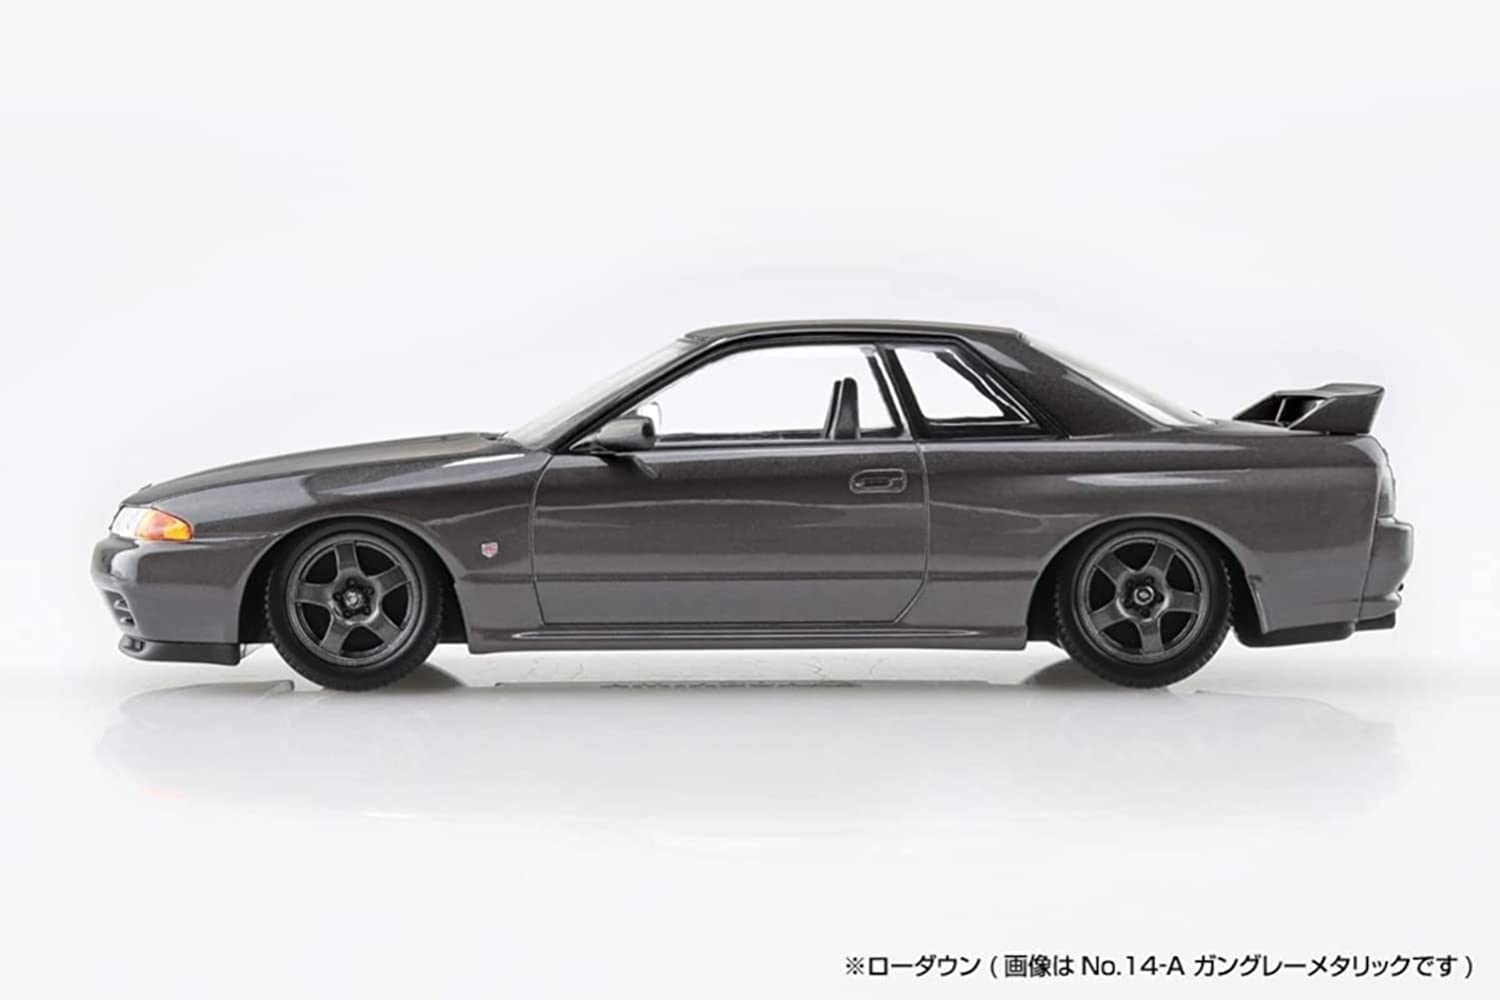 Nissan R32 Skyline GT-R (Black Pearl Metallic)